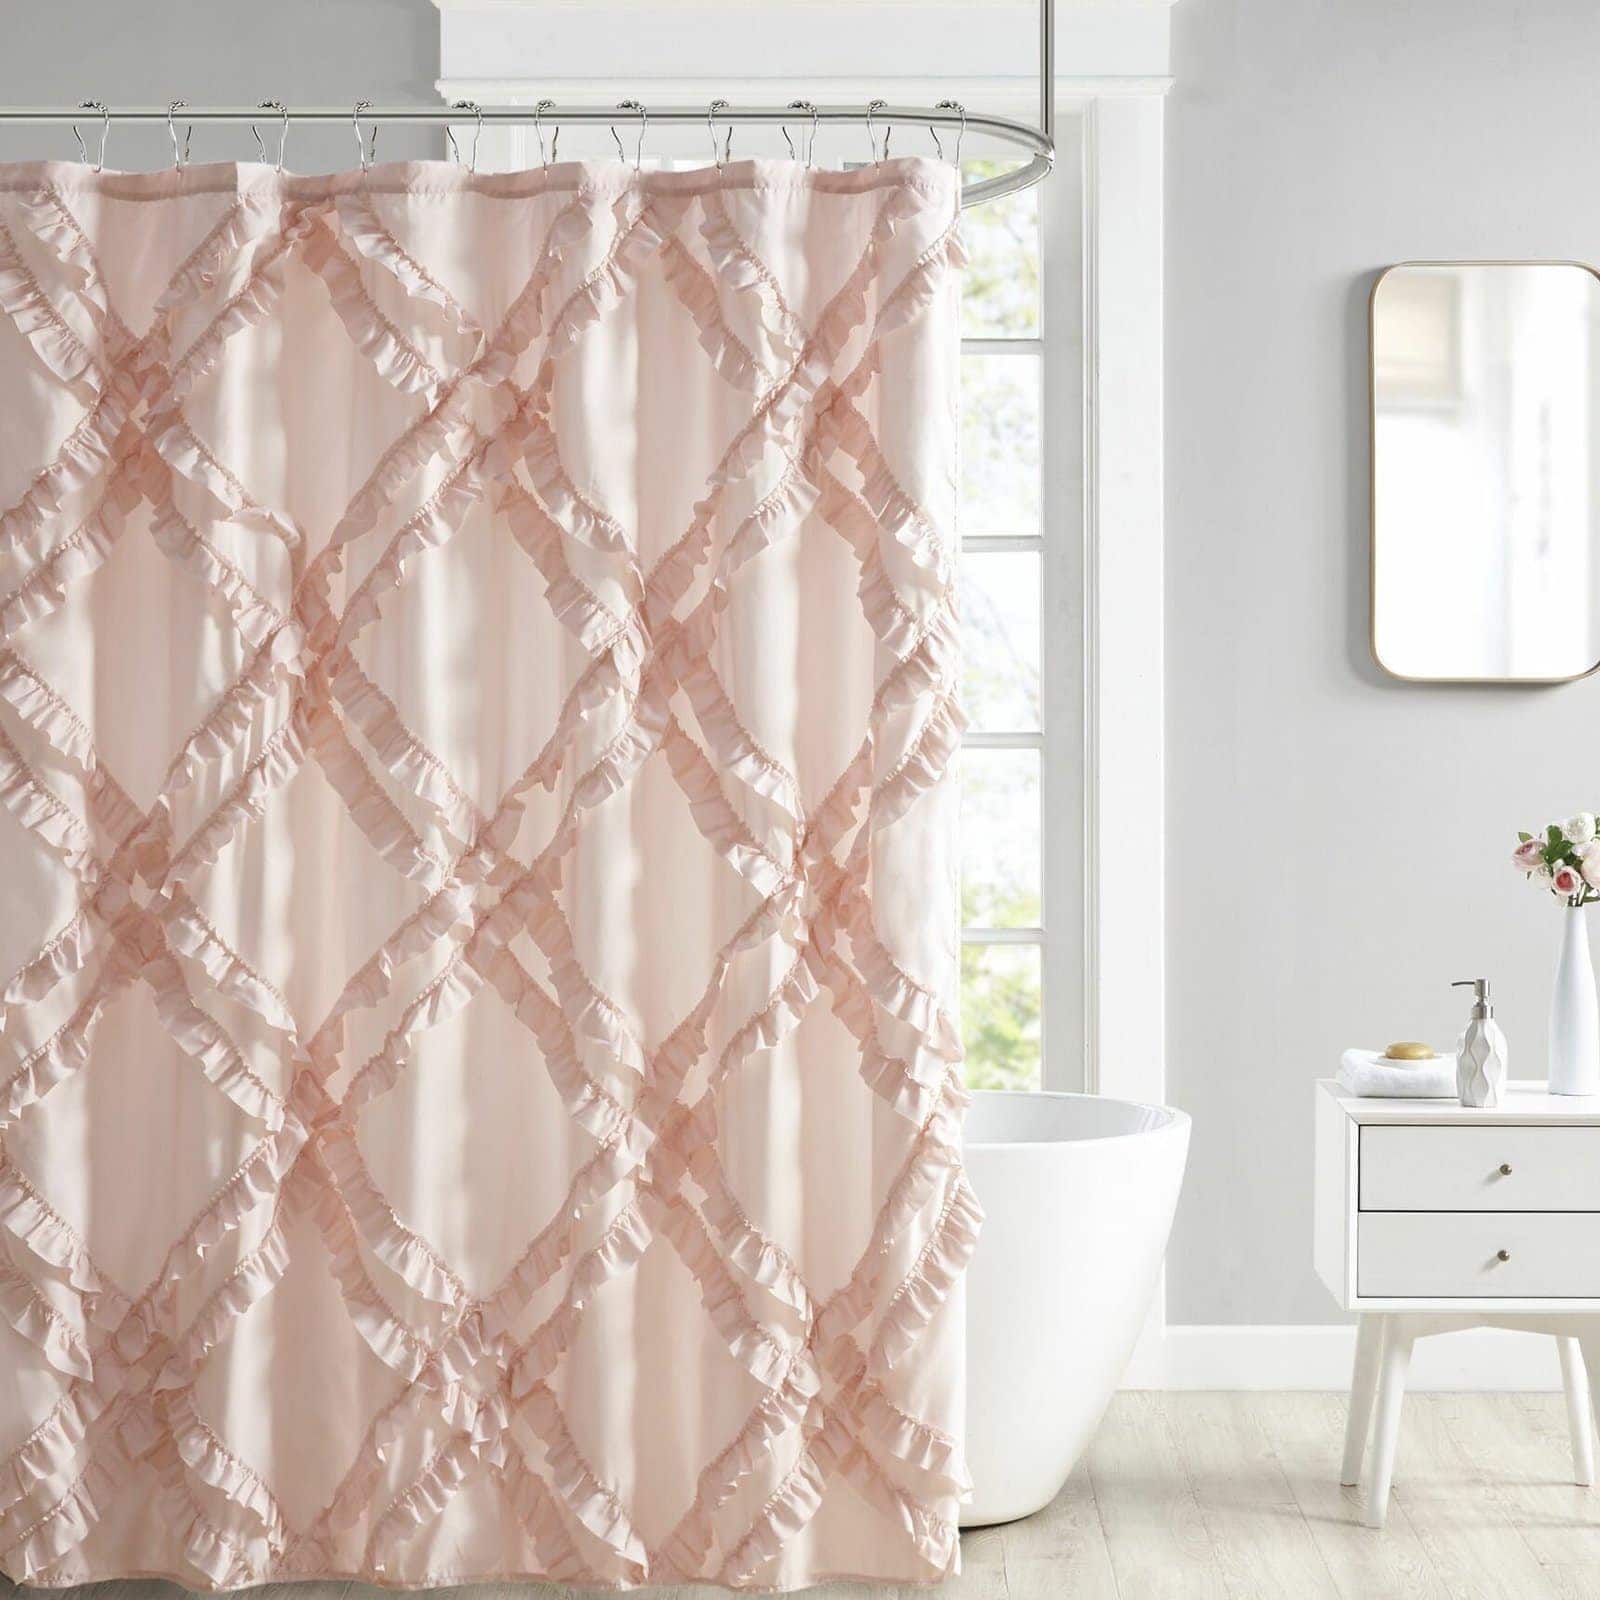 Blush Pink and Pale Grey Bathroom